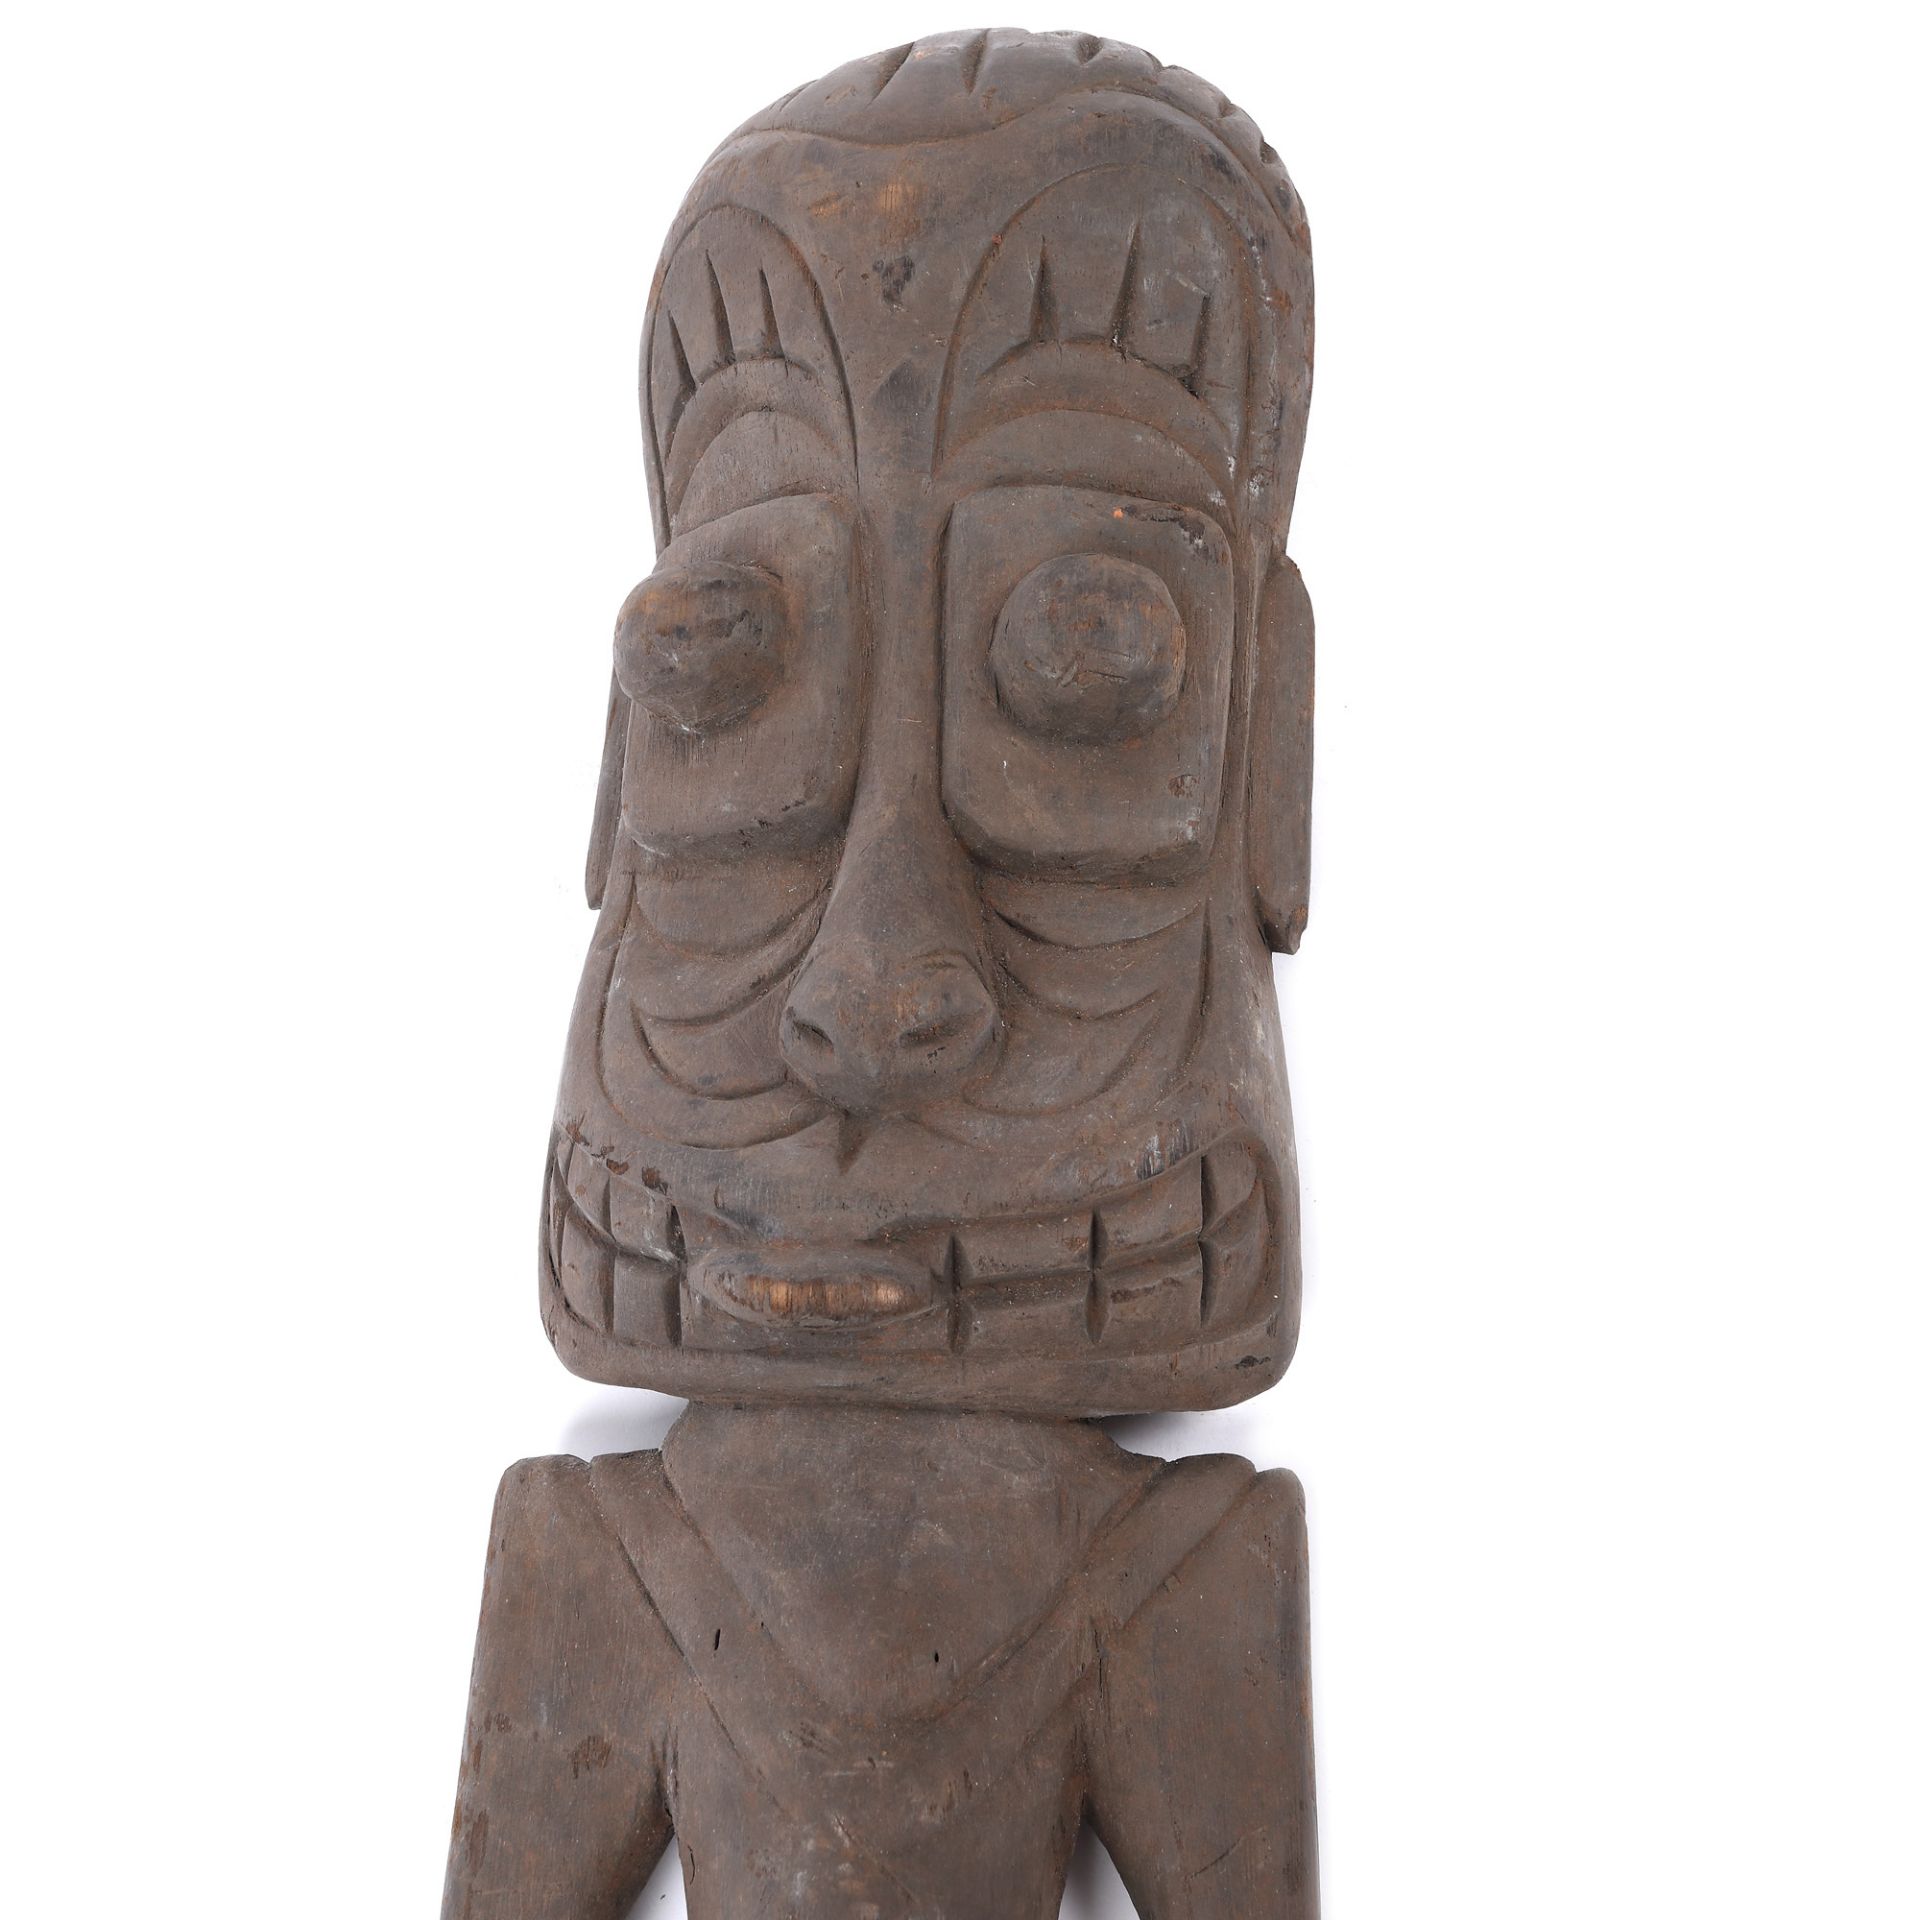 Sculpture illustrating a demon from Tambanum, Papua New Guinea - Bild 3 aus 3